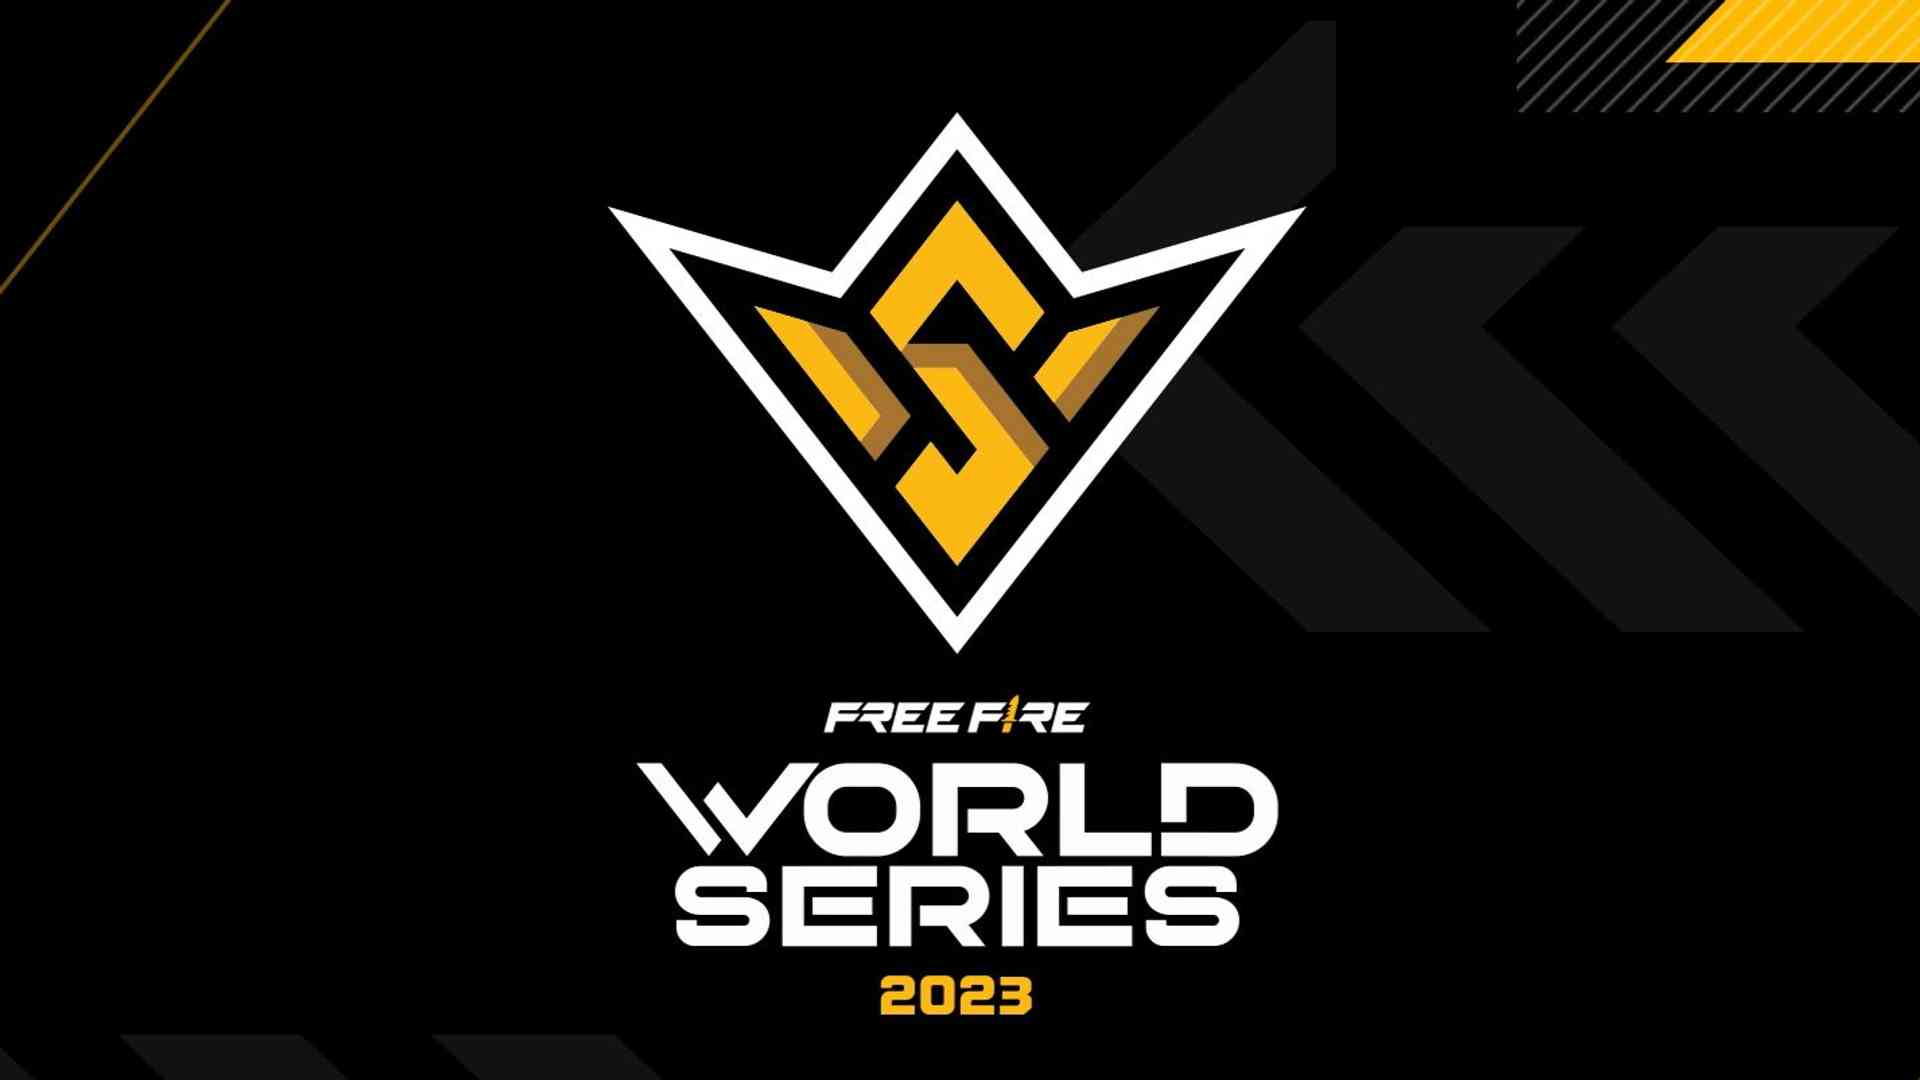 Free Fire World Series 2023 already has a date - Últimas Noticias